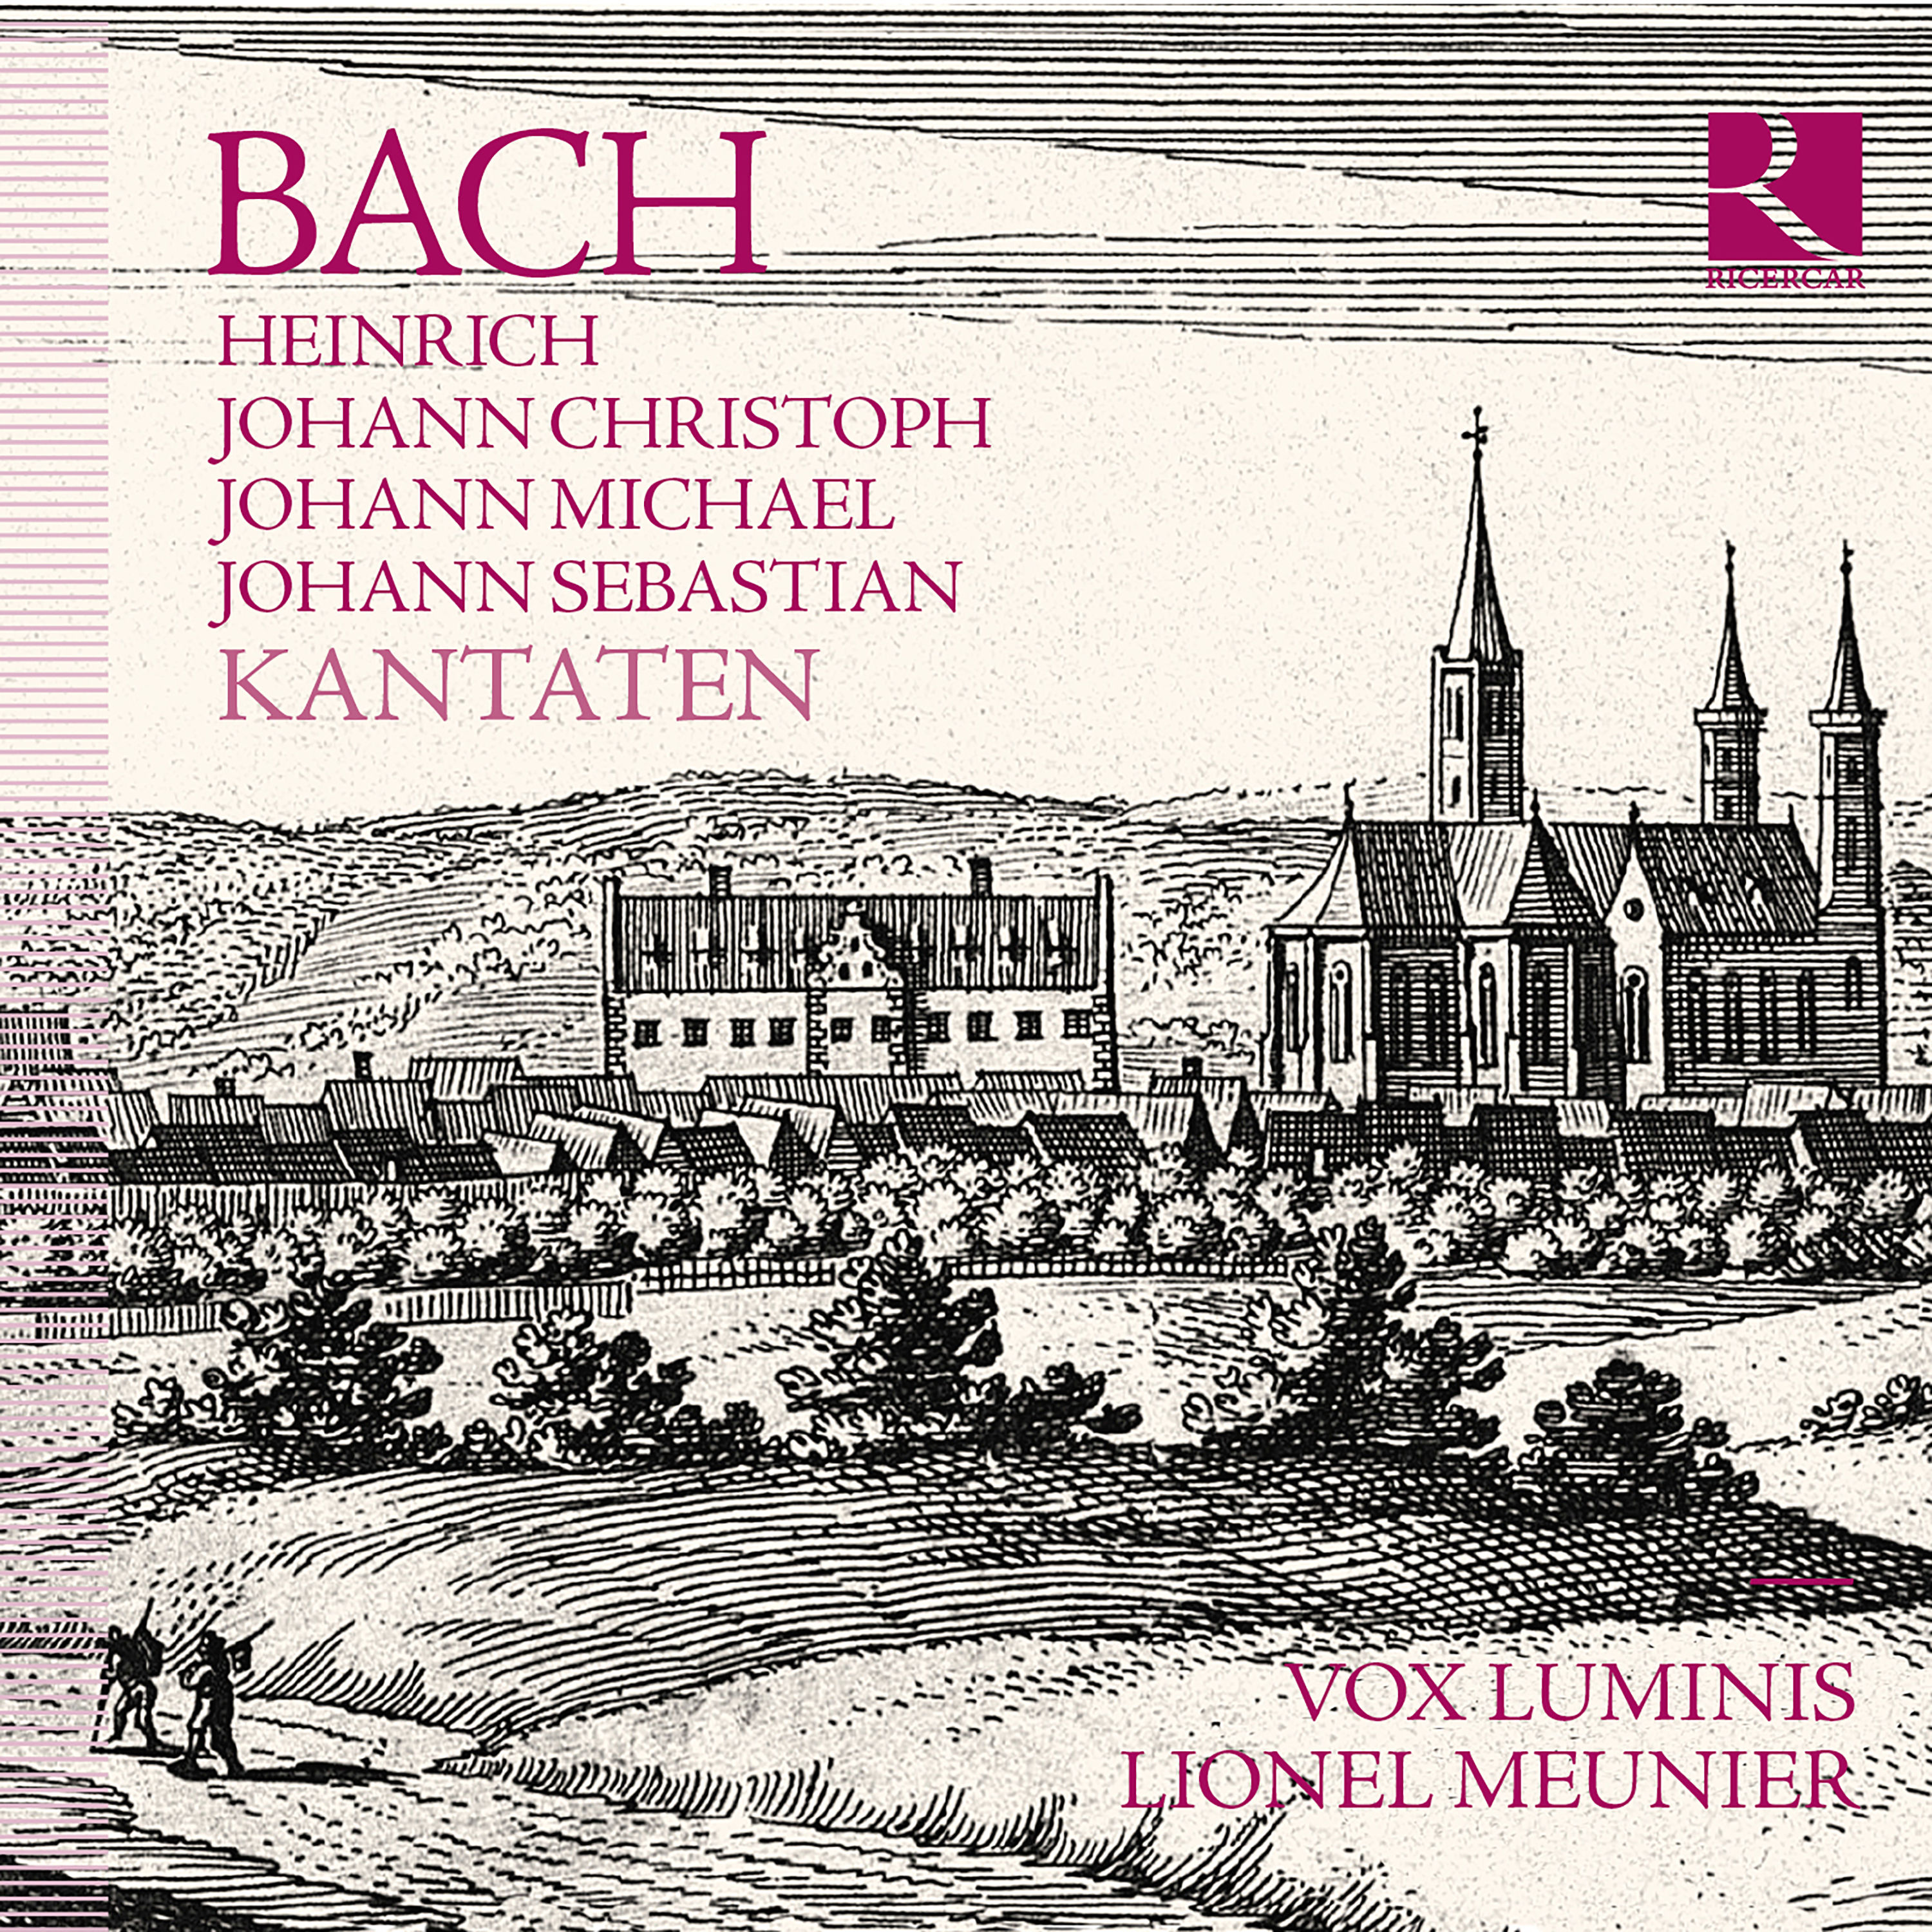 Vox Luminis & Lionel Meunier – Bach (Heinrich, J. Christoph, J. Michael, J. Sebastian): Kantaten (2019) [FLAC 24bit/96kHz]